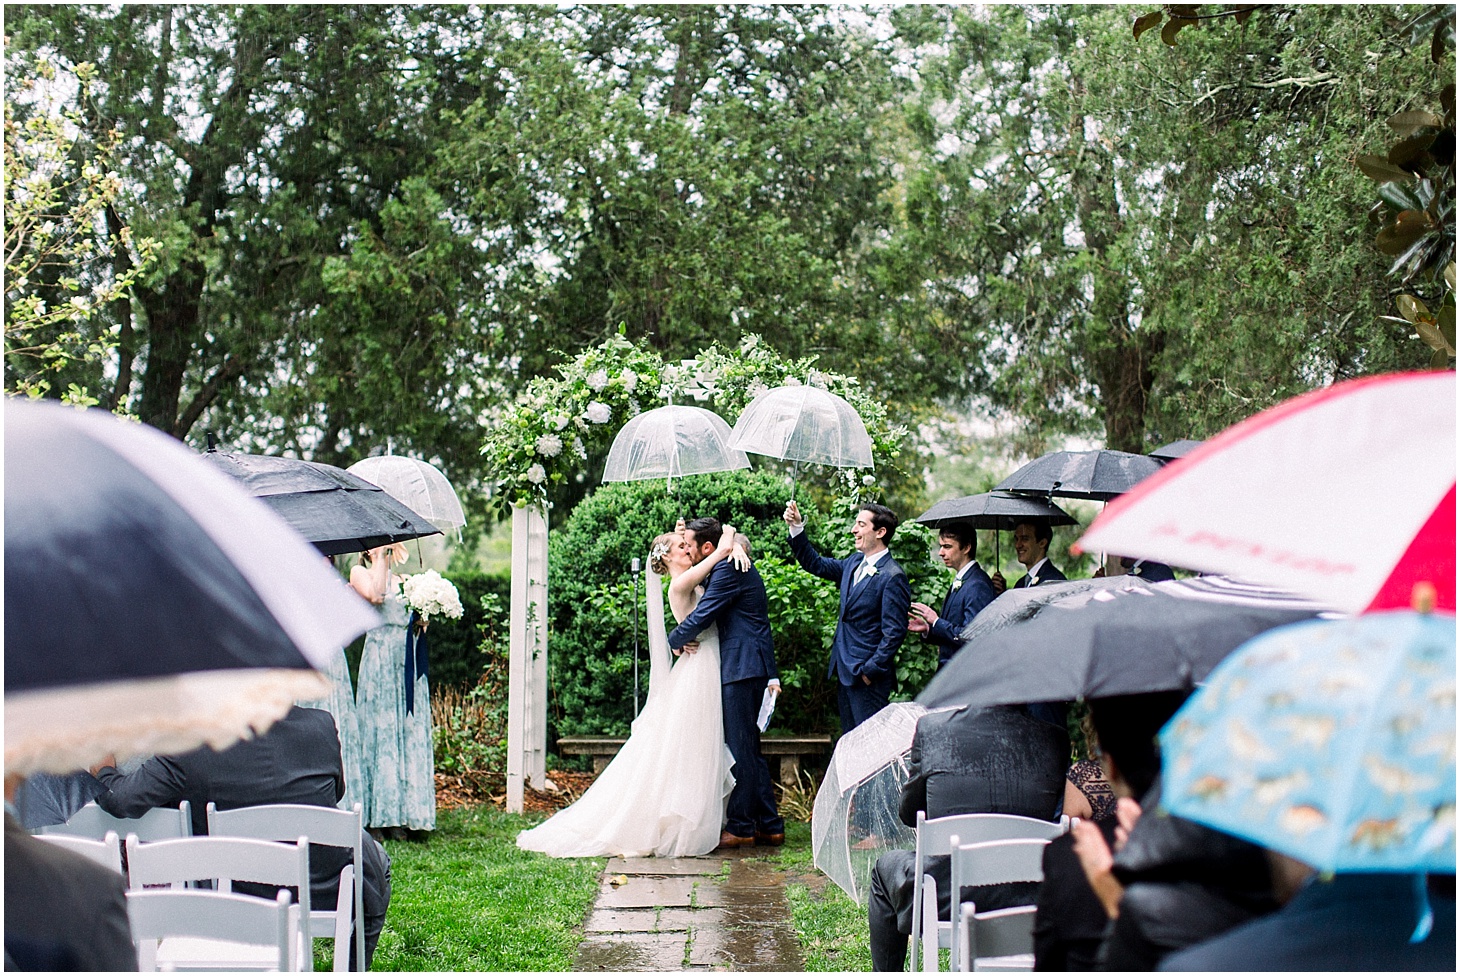 Wedding Ceremony at Oatlands Historic House and Gardens, Rainy Springtime Garden Wedding at Oatlands Plantation, Sarah Bradshaw Photography, DC Wedding Photographer